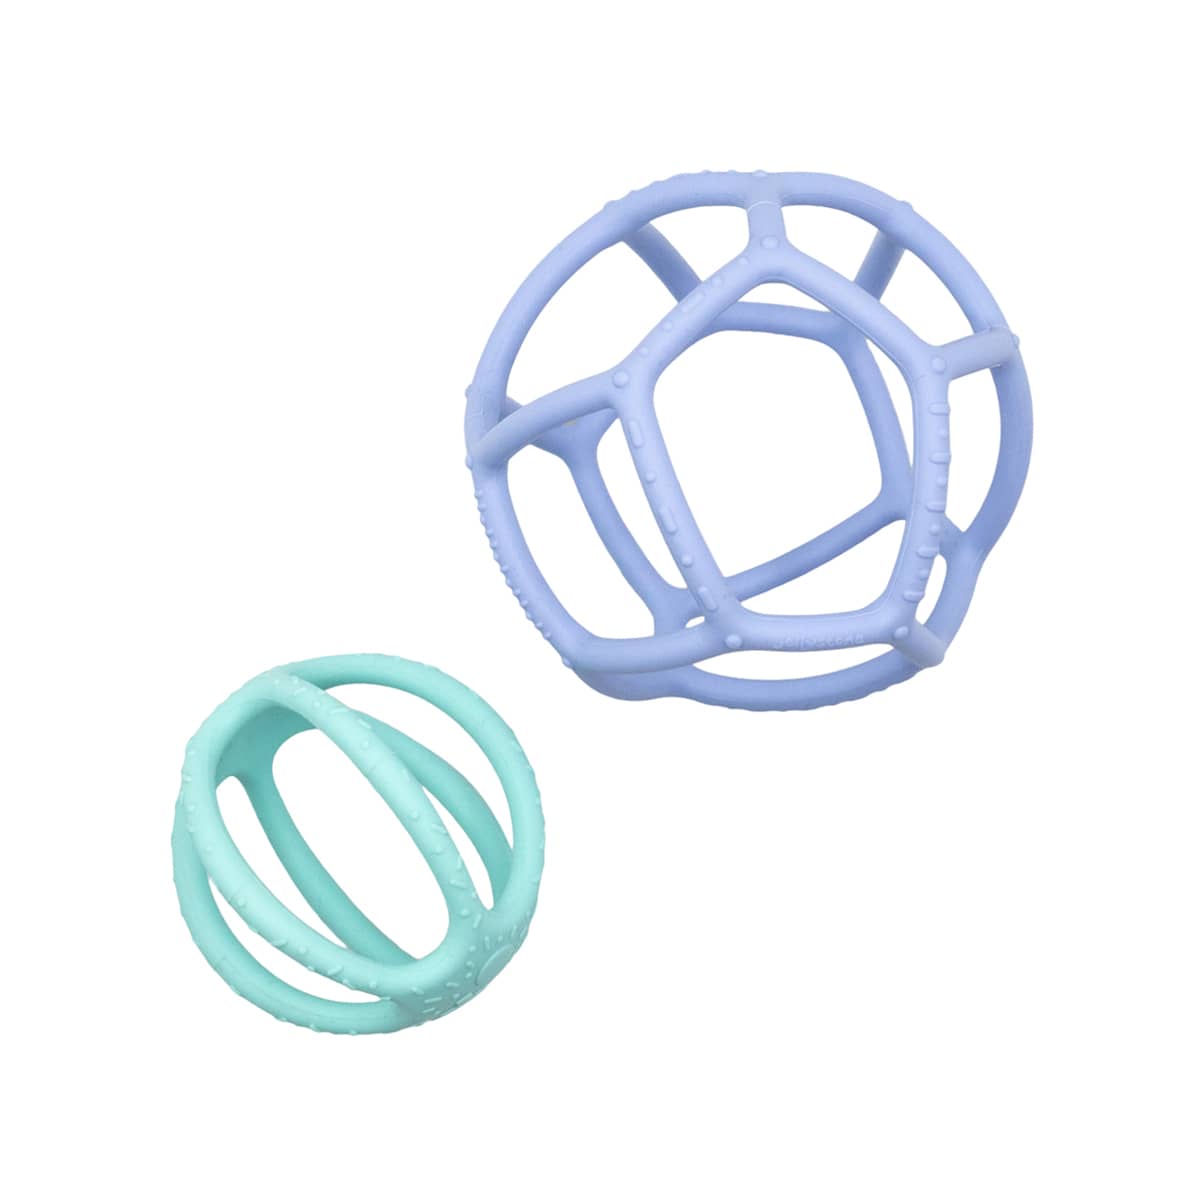 Jellystone Designs Sensory Ball and Fidget Ball Pack - Blue Mint